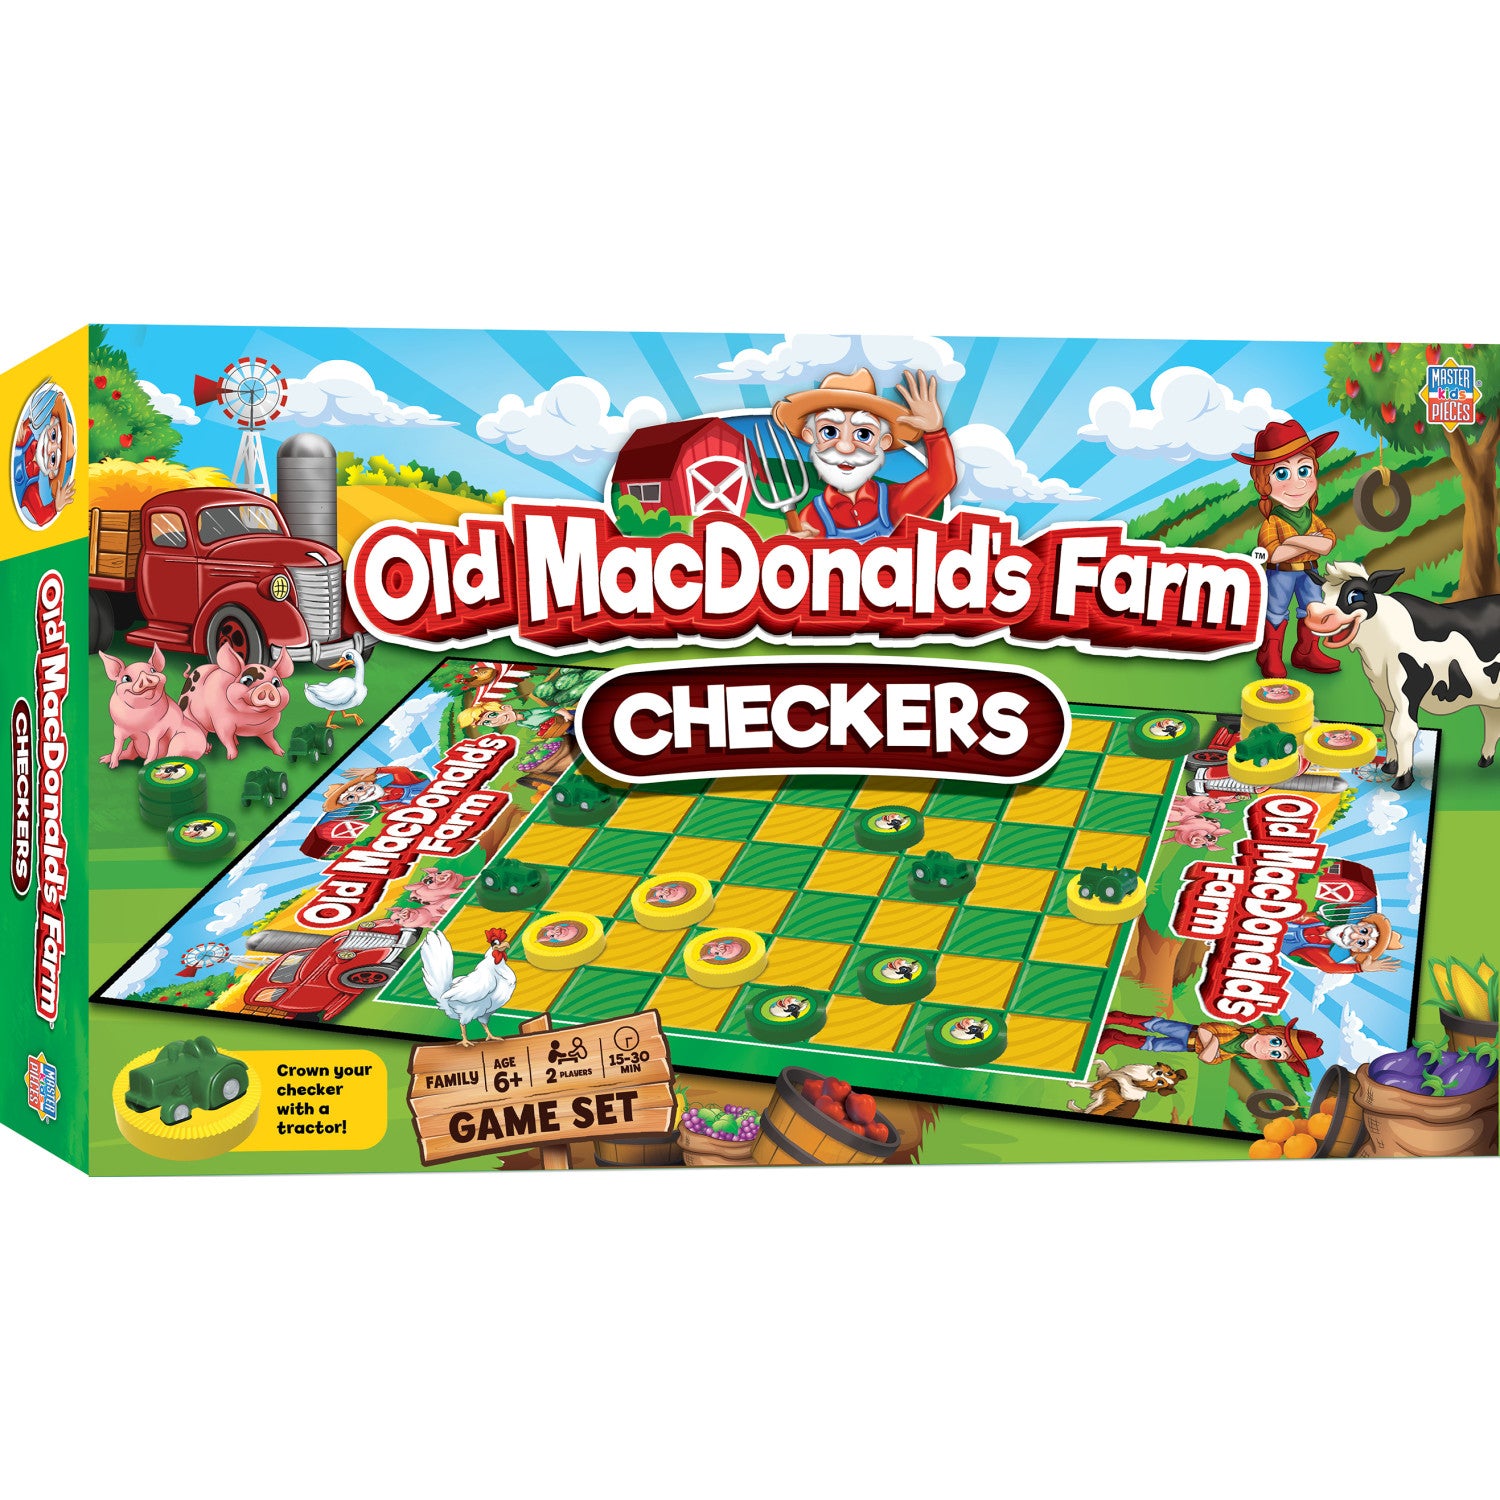 Old MacDonald's Farm Checkers